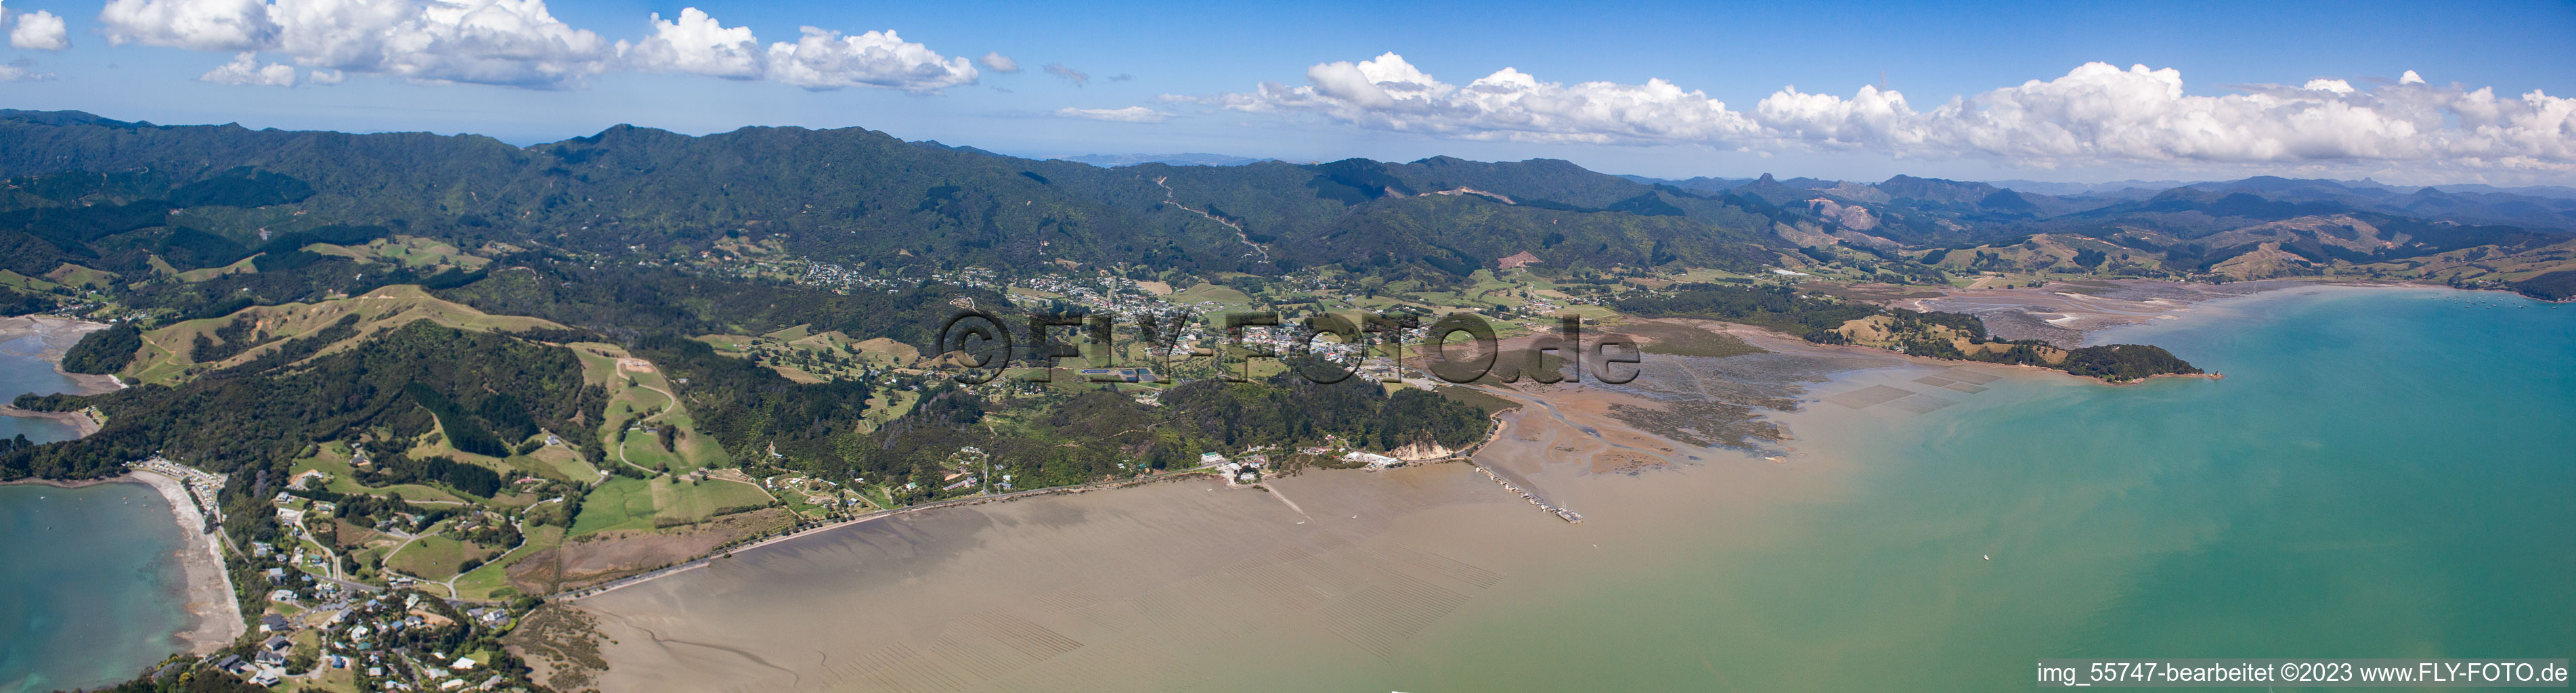 Luftaufnahme von Panorama in Coromandel im Bundesland Waikato, Neuseeland